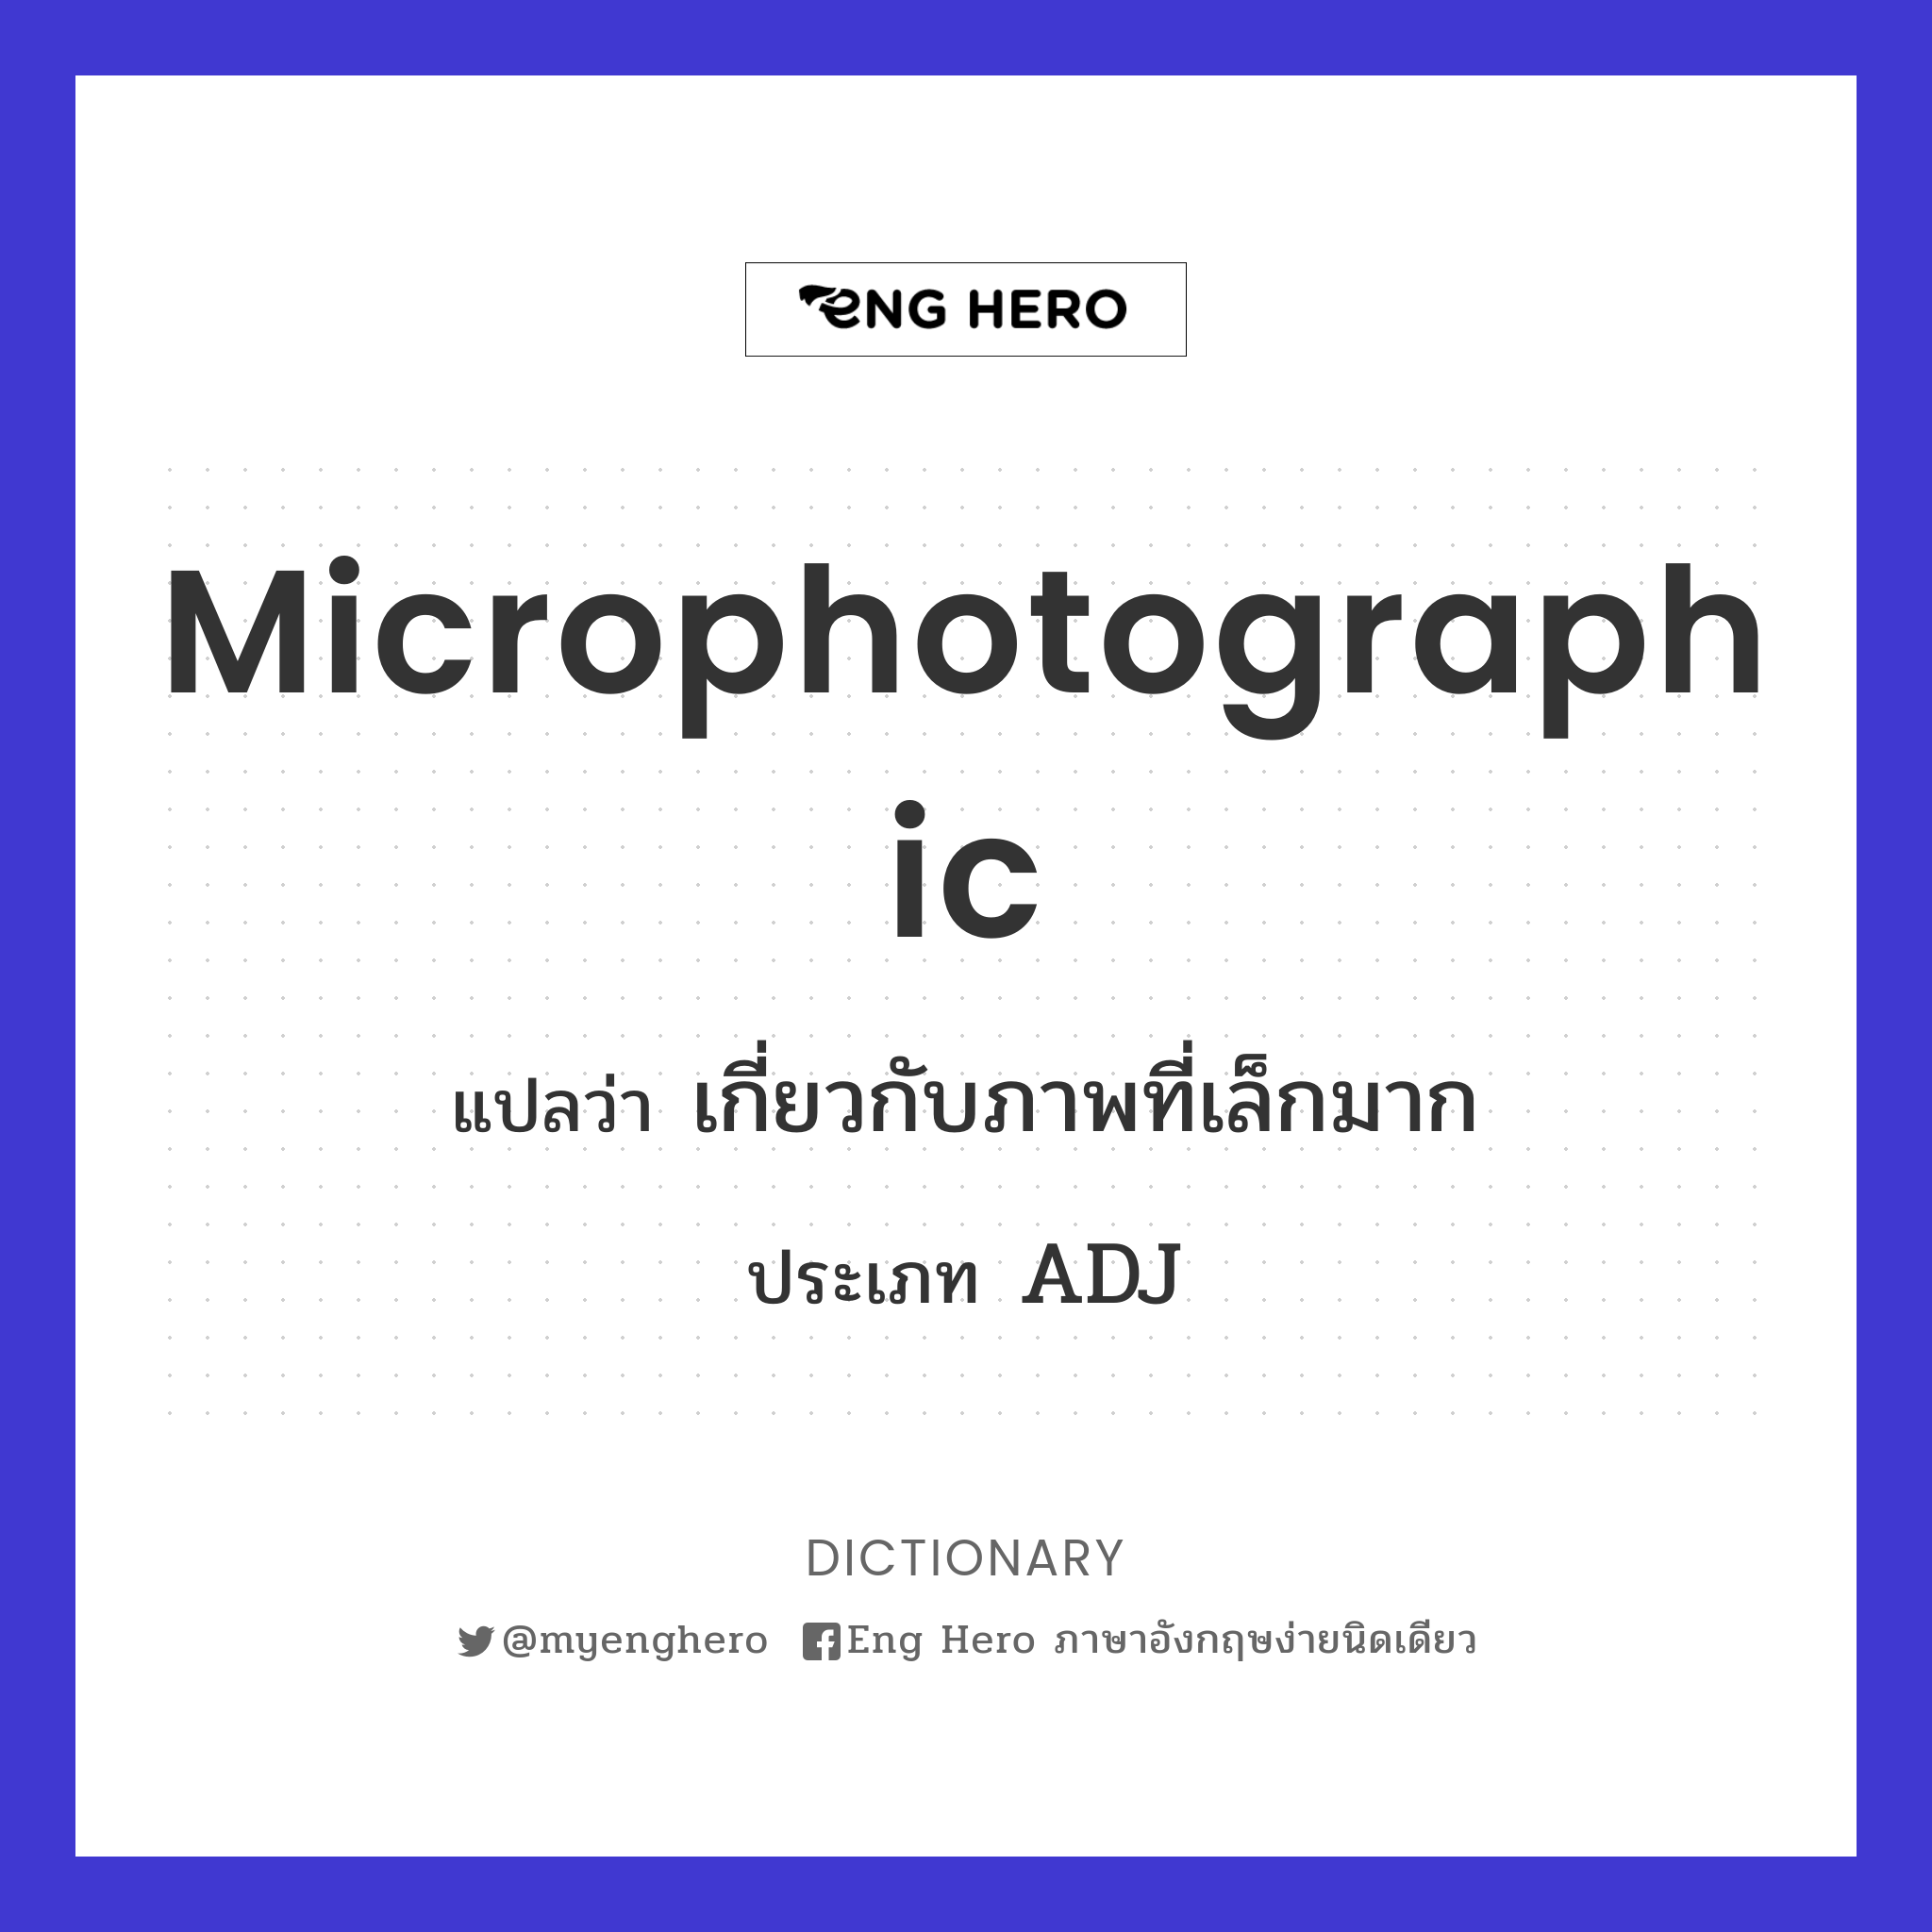 microphotographic